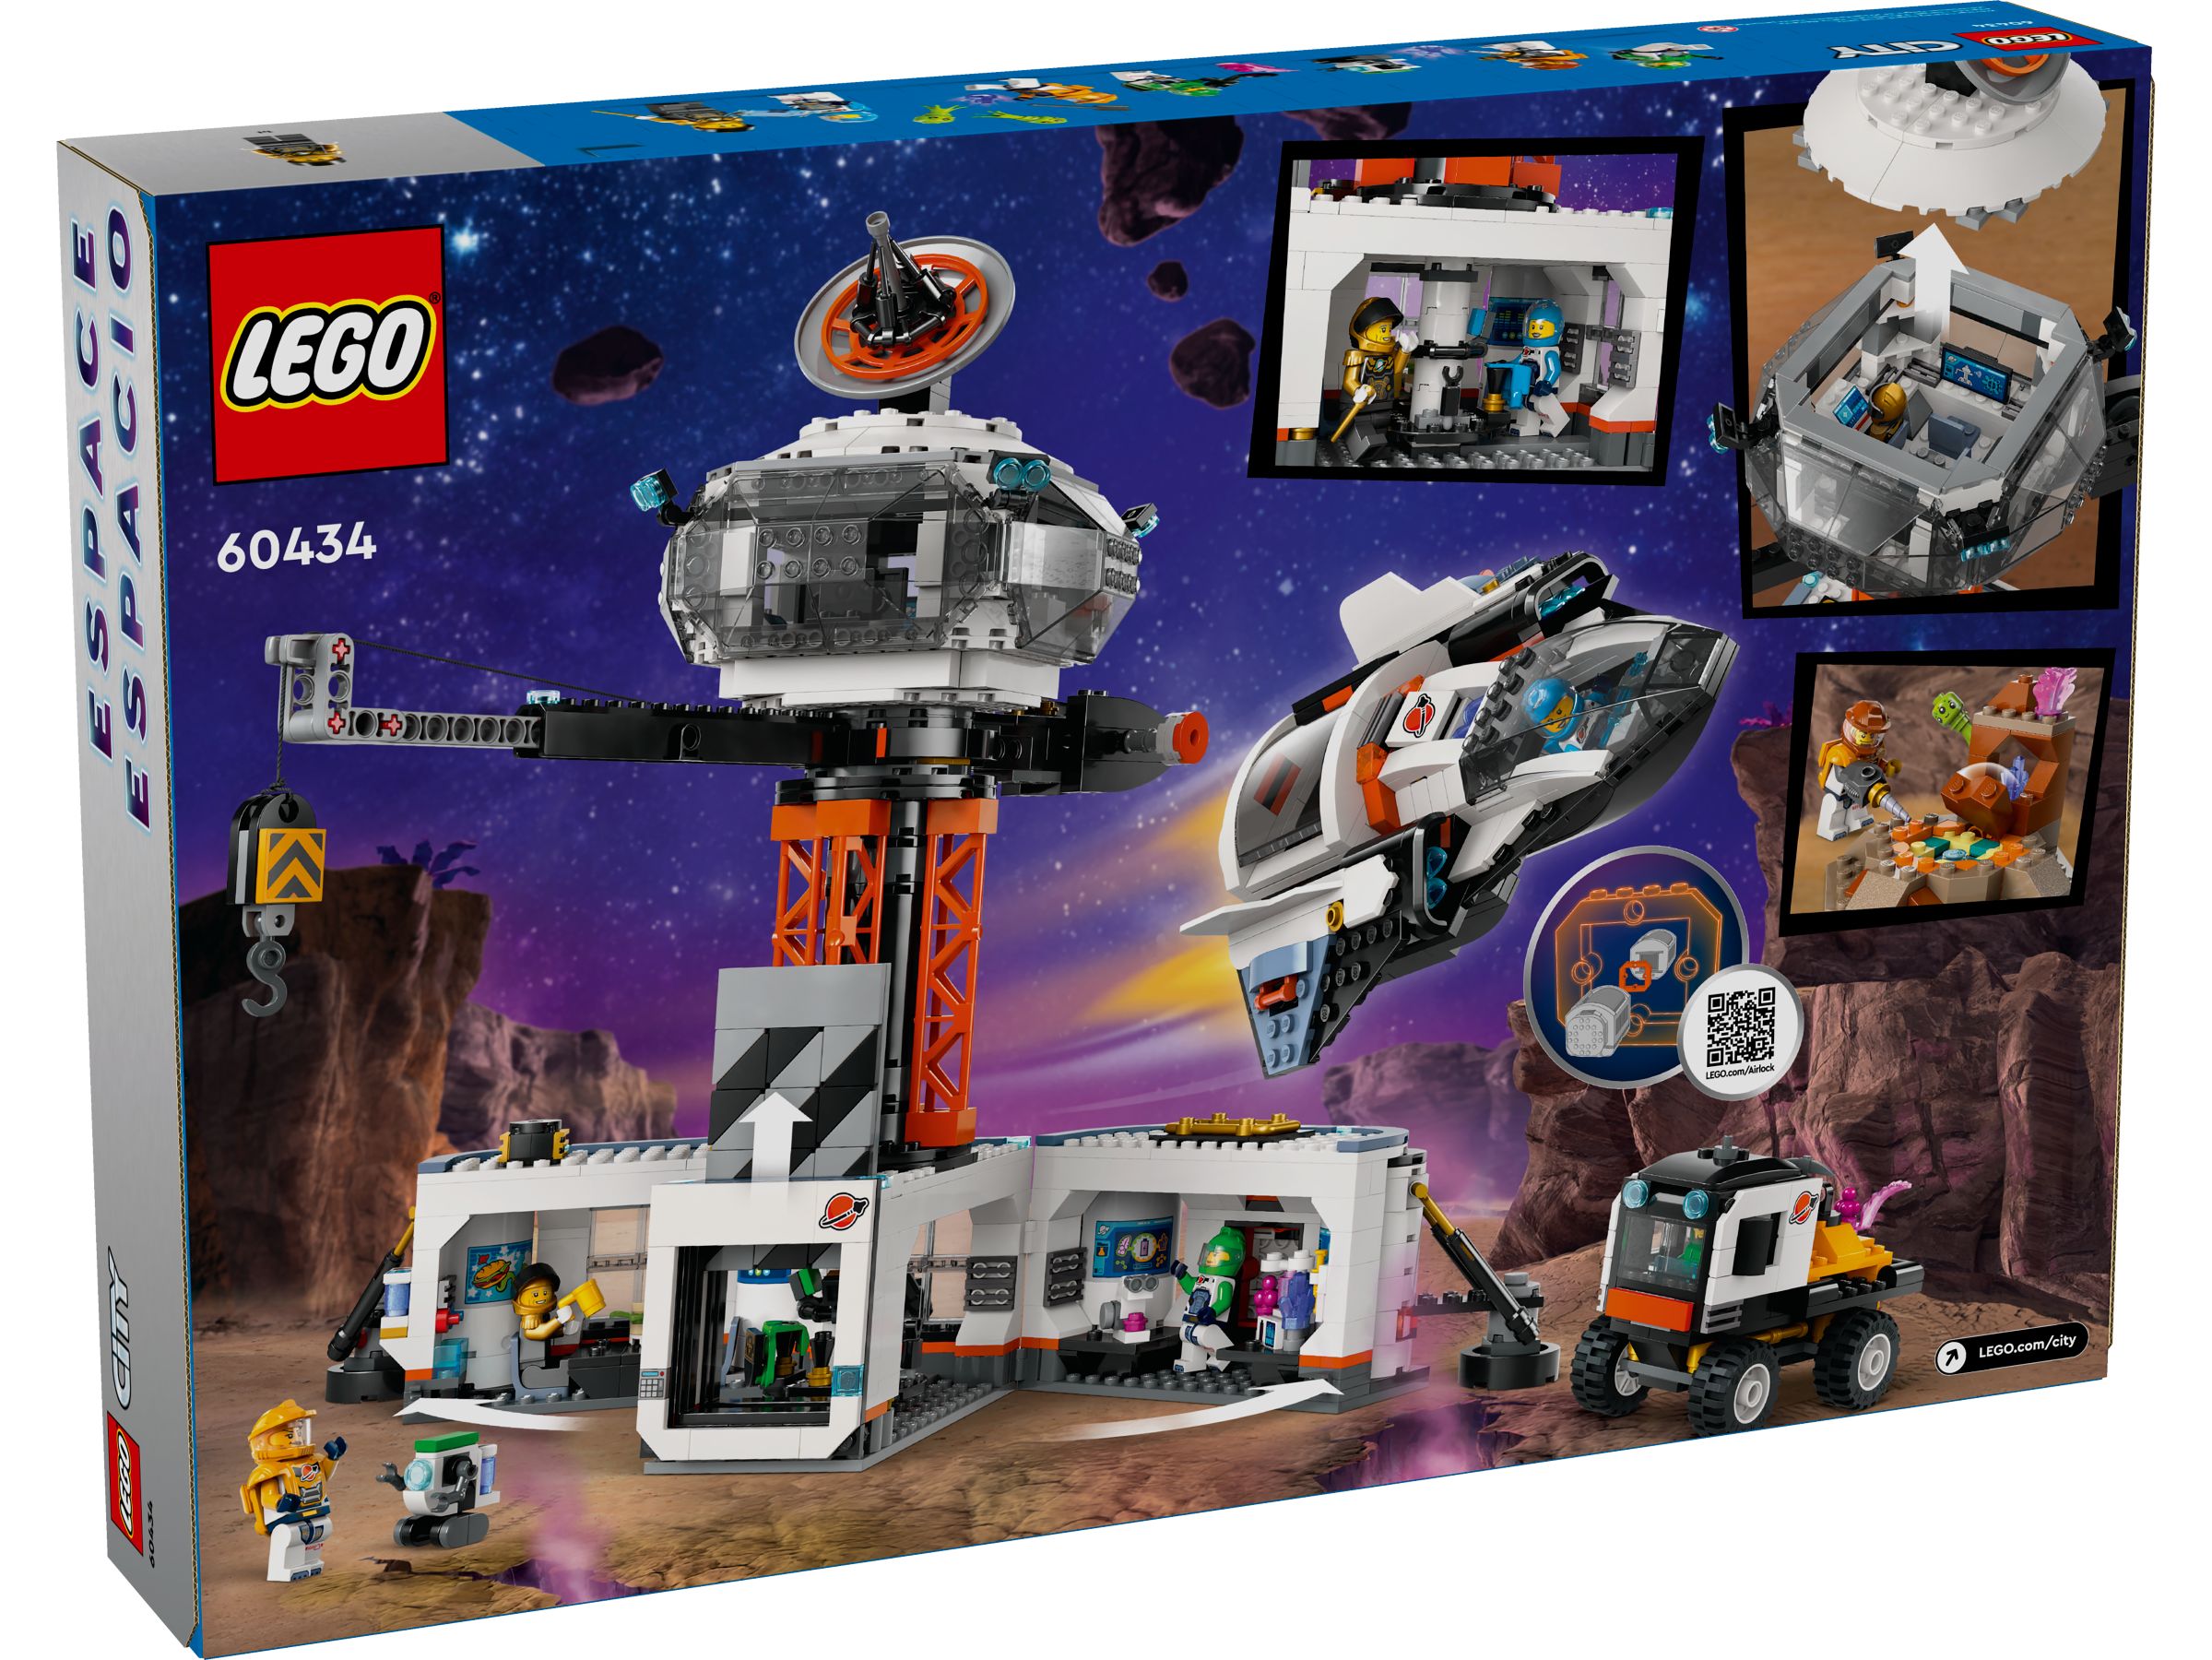 LEGO City 60434 Raumbasis mit Startrampe LEGO_60434_Box5_v39.jpg